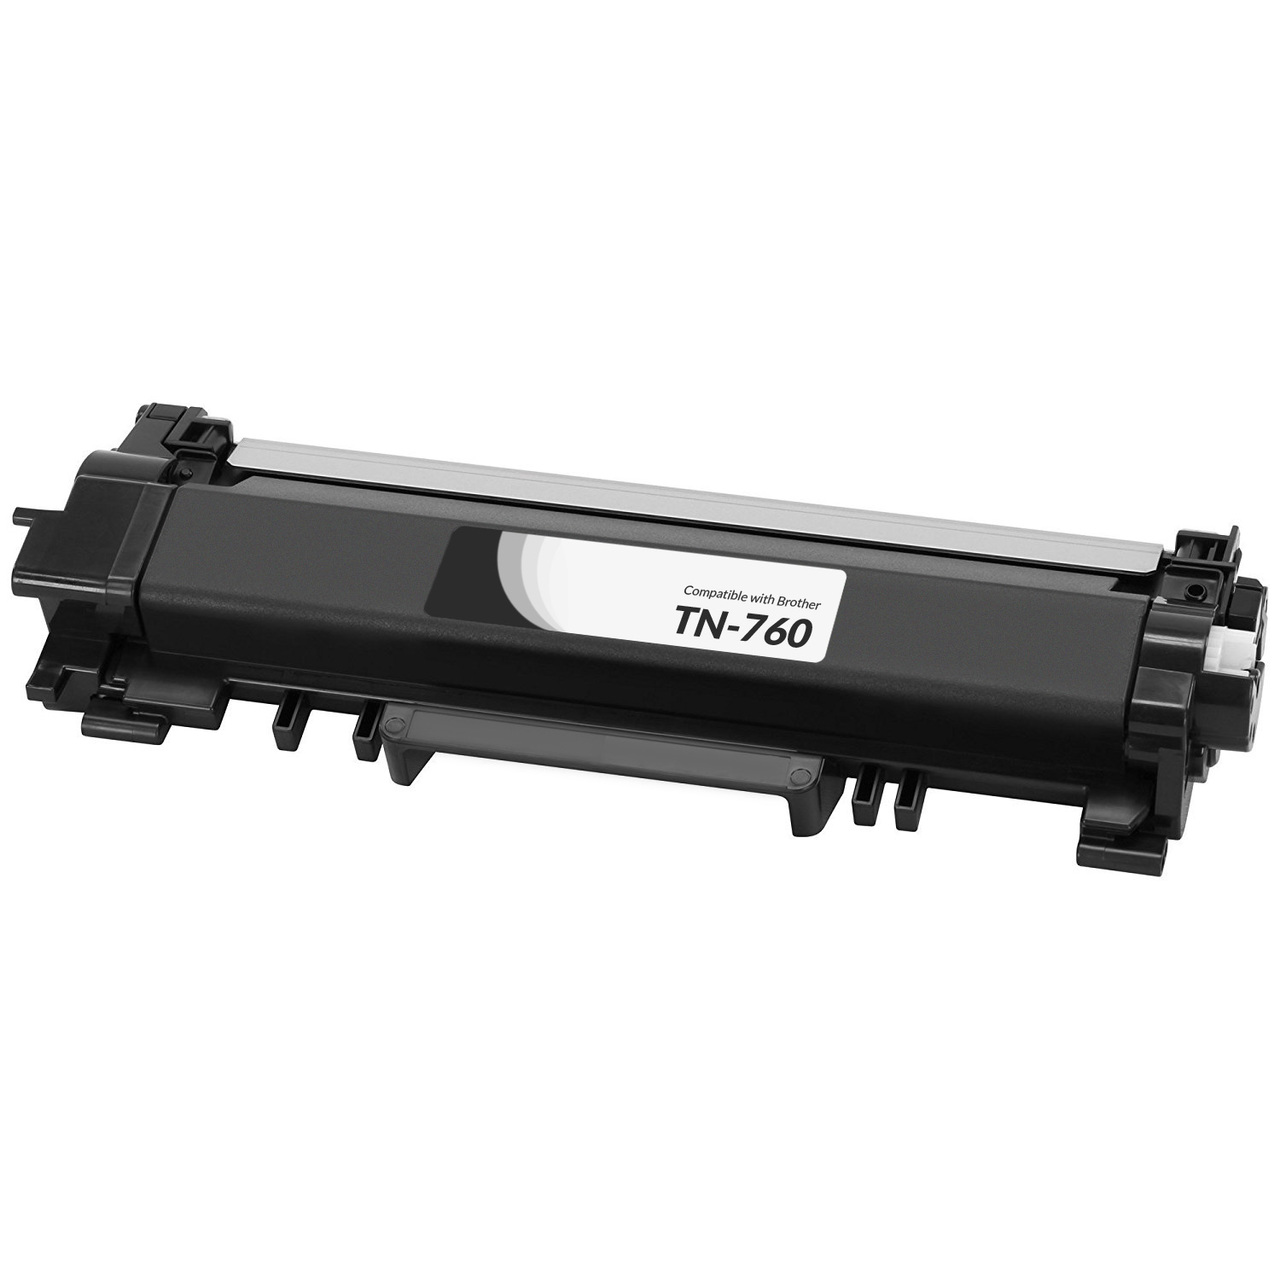 True Image Compatible Toner Cartridge for Brother TN-760 HL-L2350DW HL-L2370DW  HL-L2395DW DCP-L2550DW MFC-L2710DW MFC-L2750DW Printer (Black 2-Pack) 